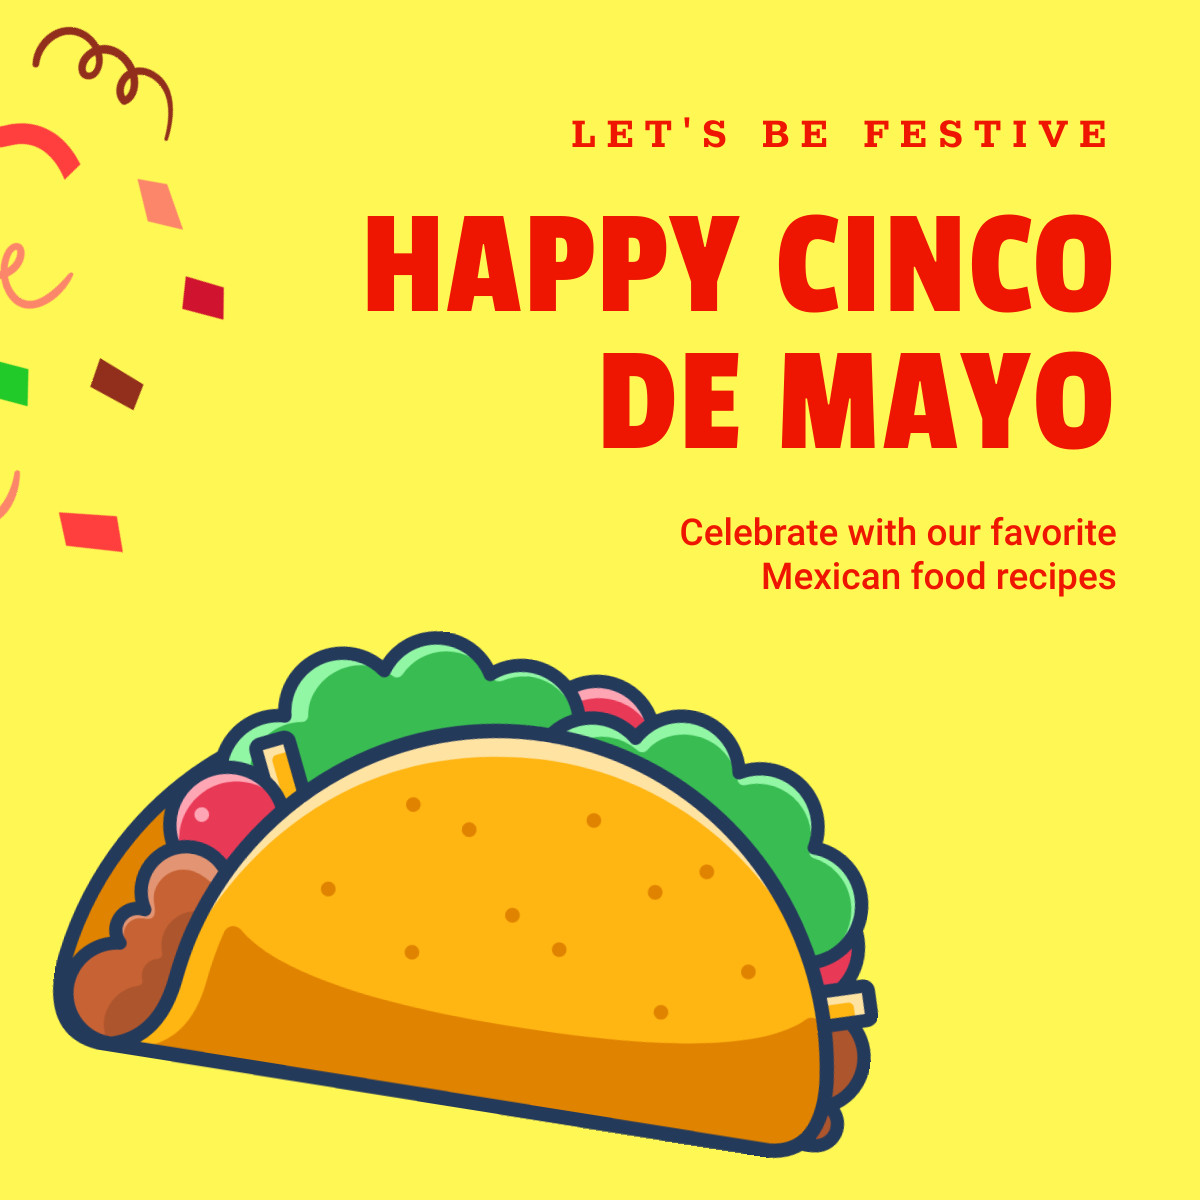 Happy Cinco de Mayo with Festive Recipes Responsive Square Art 1200x1200